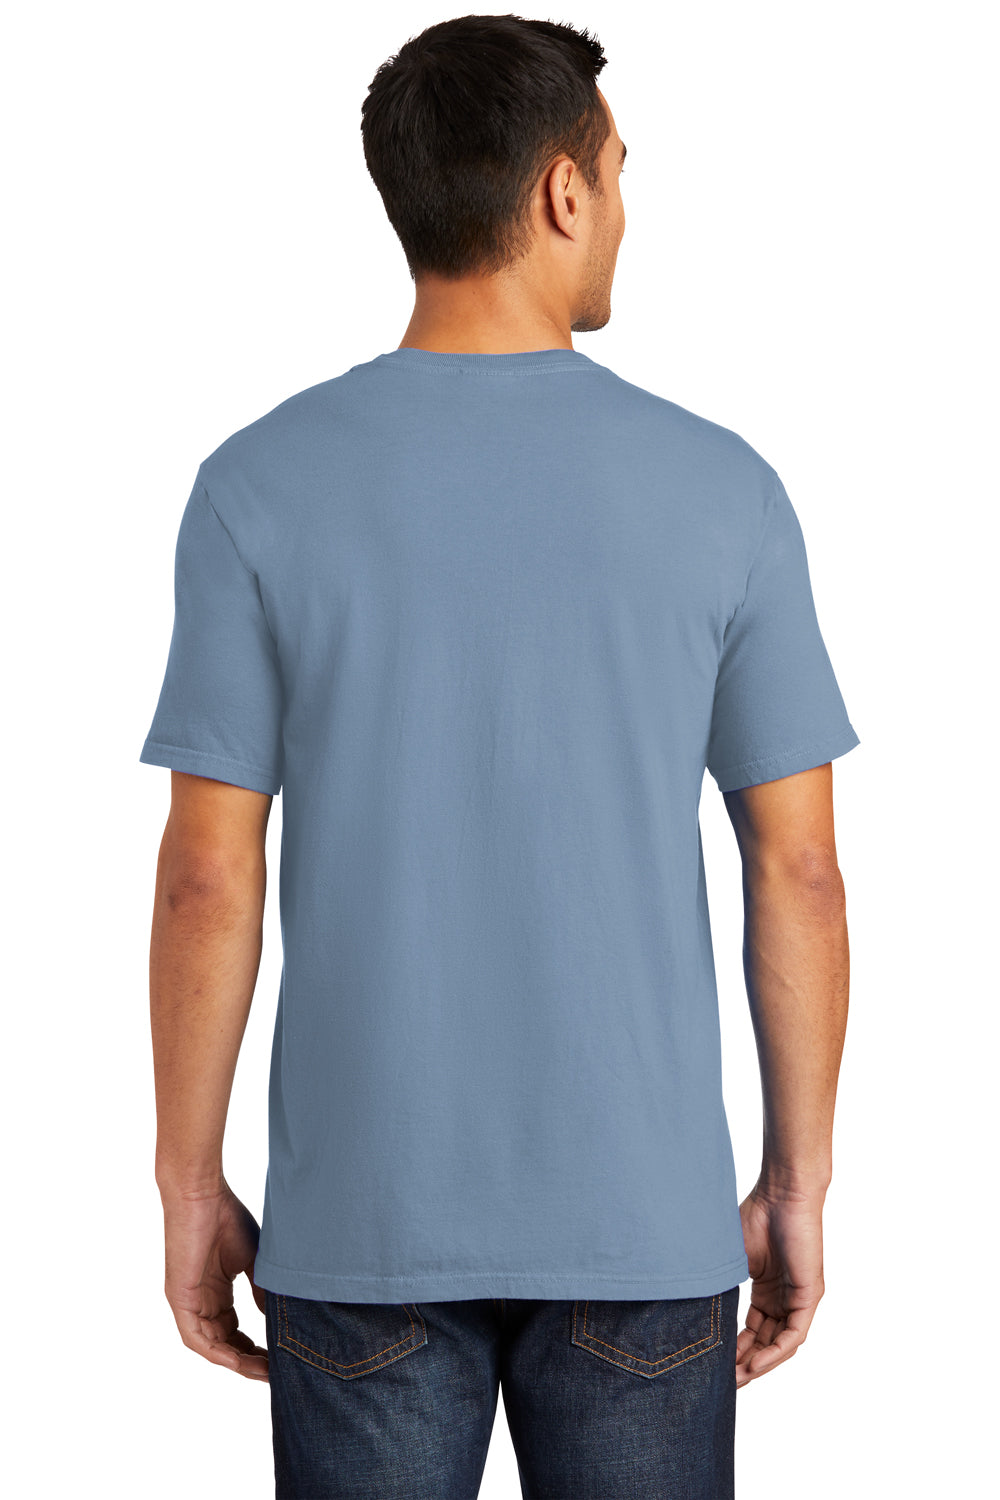 Port & Company PC099 Mens Beach Wash Short Sleeve Crewneck T-Shirt Faded Denim Blue Back